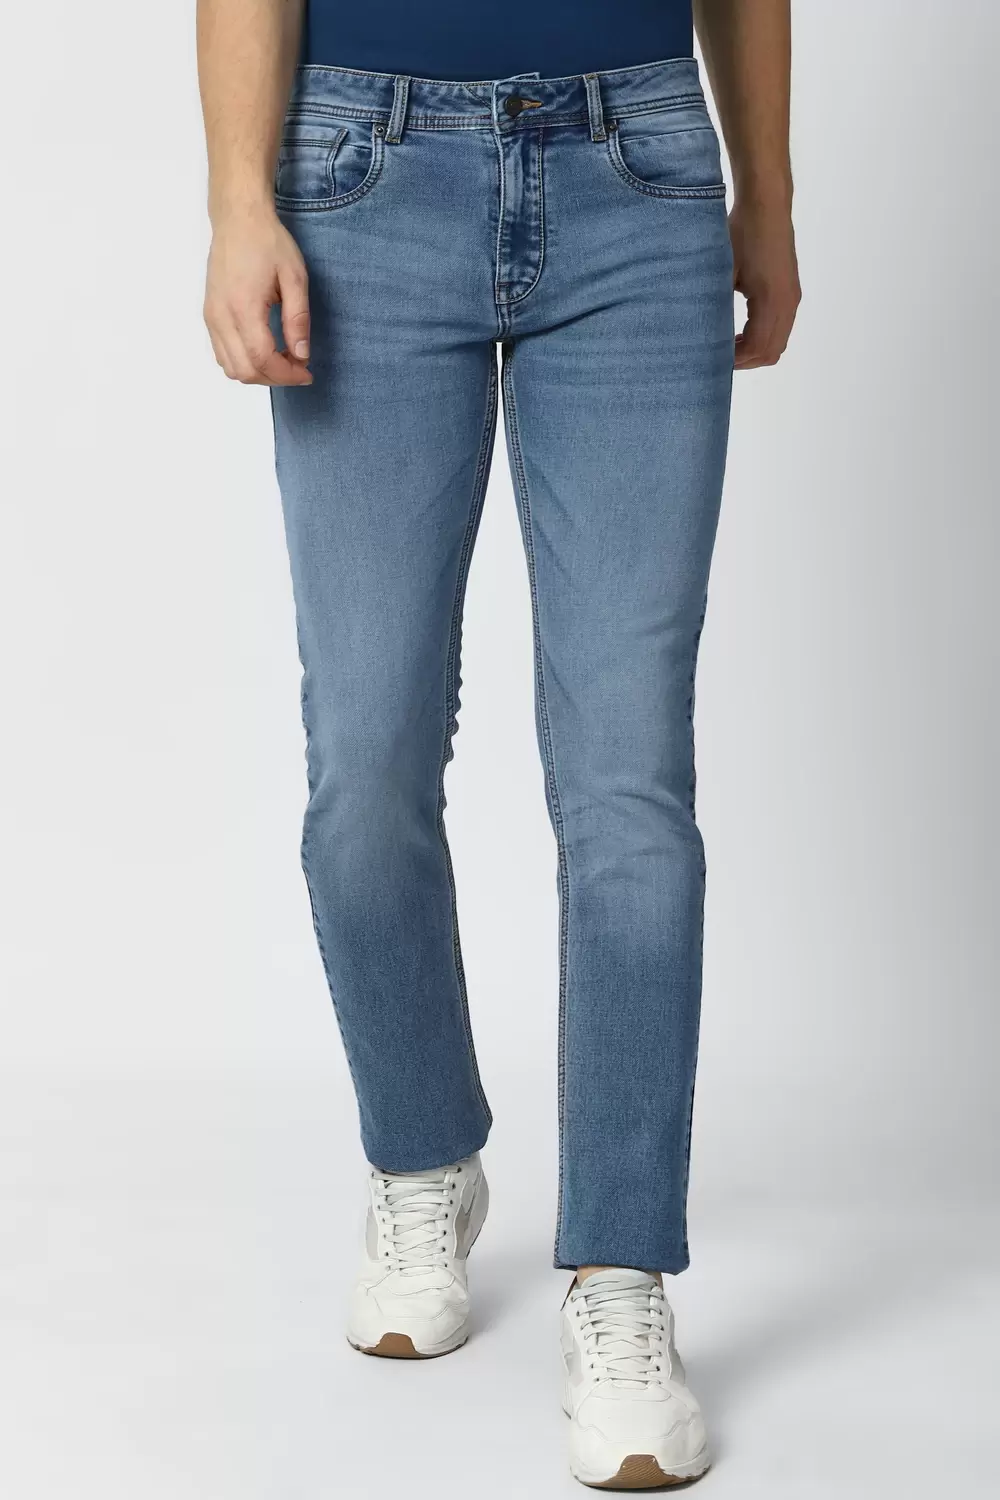 Peter England Grey Blue Mid Wash Slim Jeans